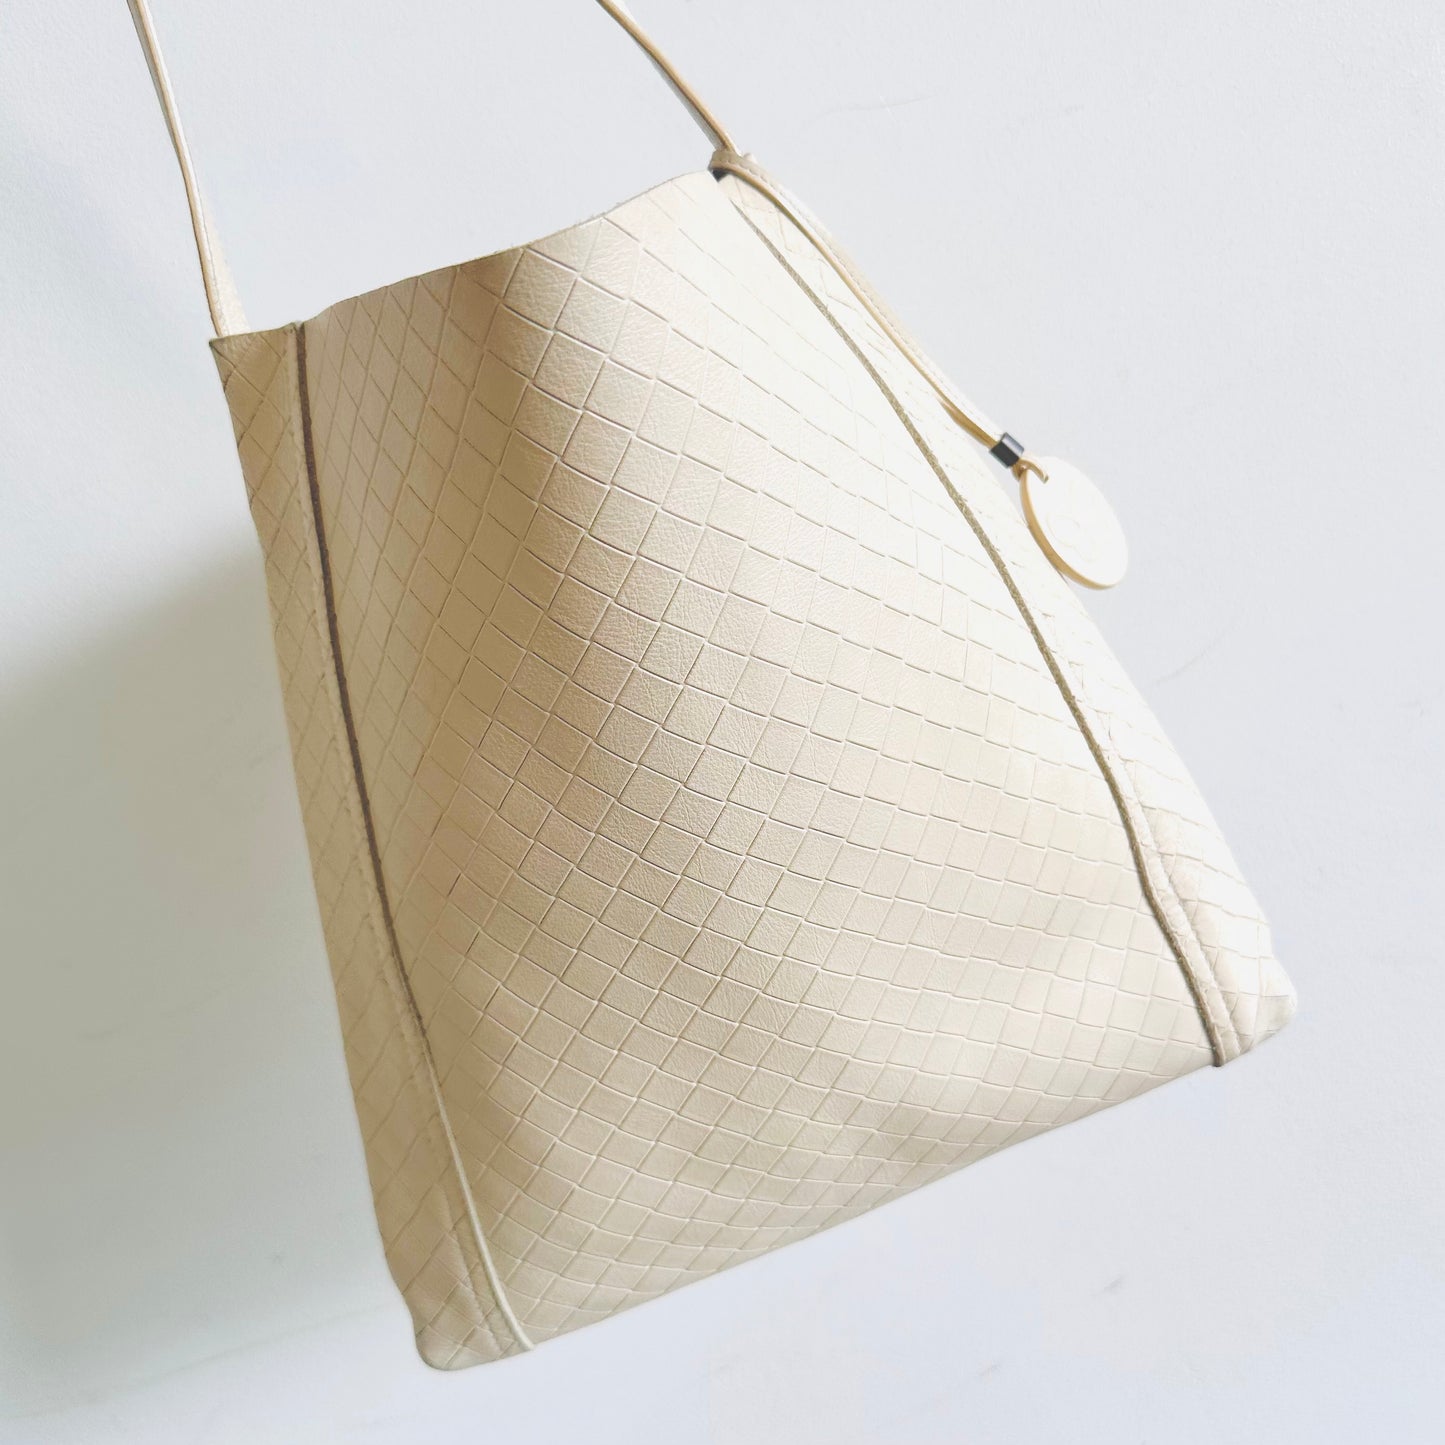 Bottega Veneta BV Intrecciato White Nappa Woven Leather Butterfly Shoulder Sling Bag